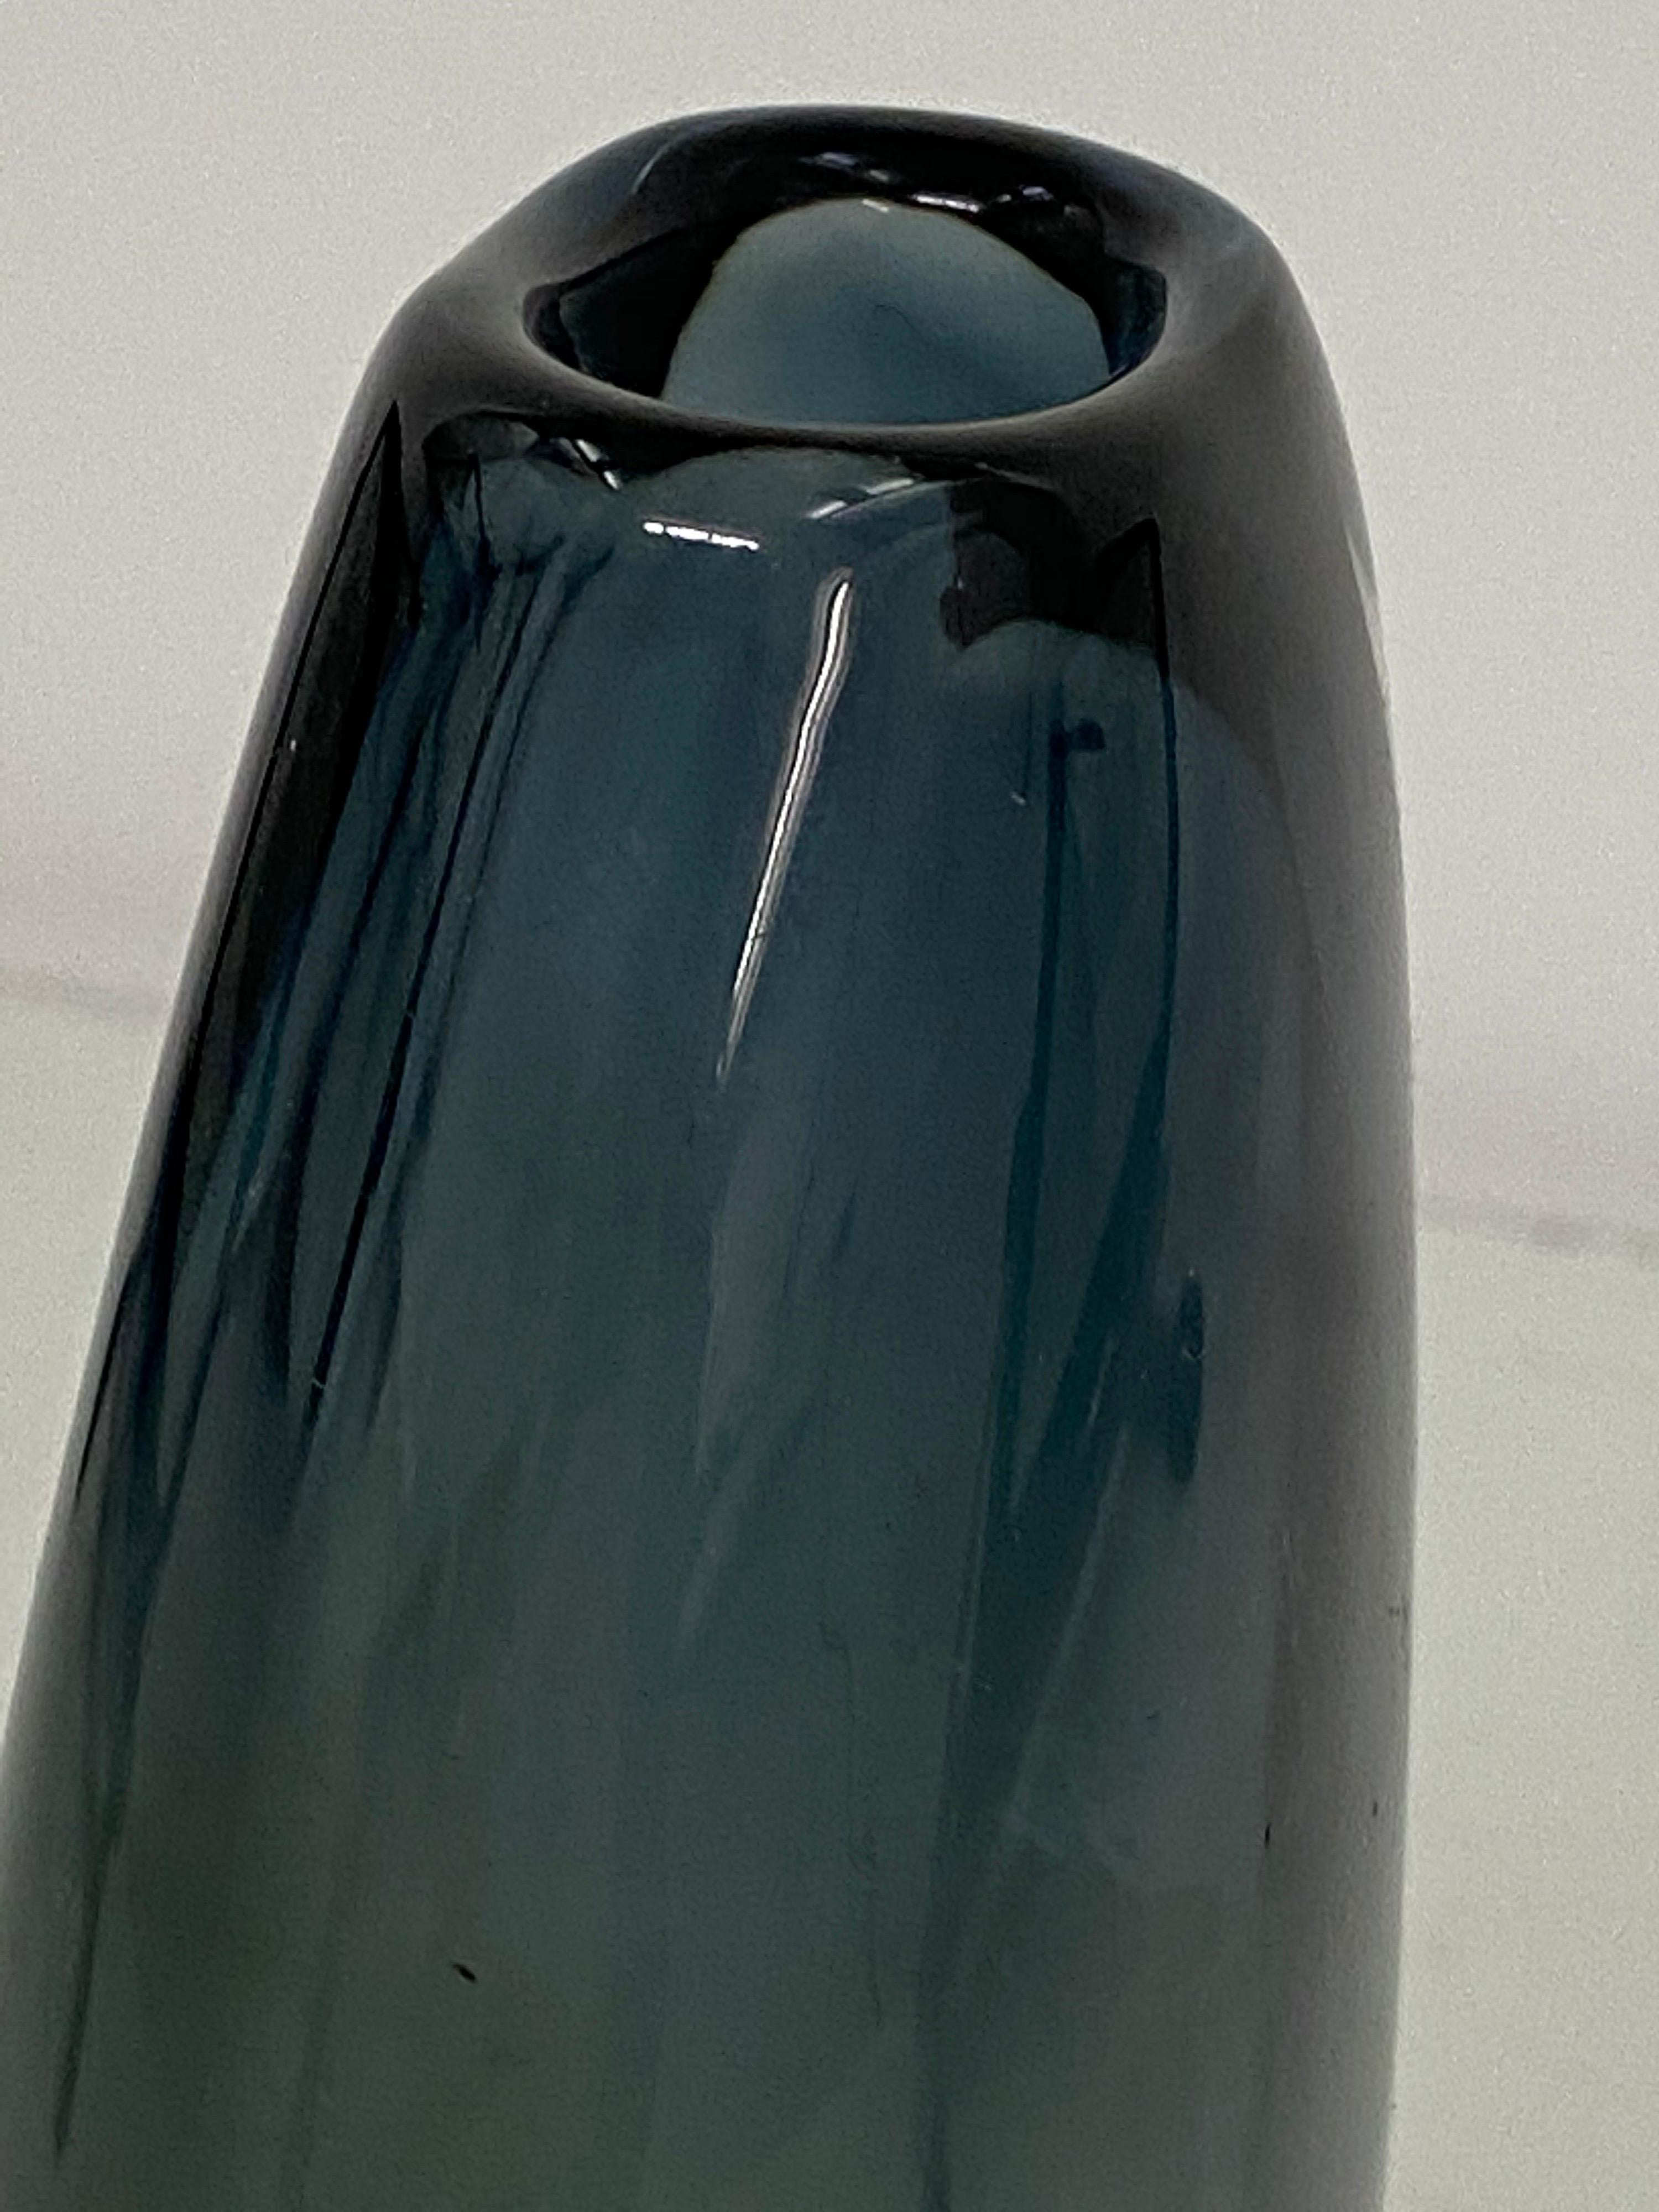 Mid-20th Century Sommerso Glass Vase, from Scandinavia 1950, Signed Nils Landberg Orrefors For Sale